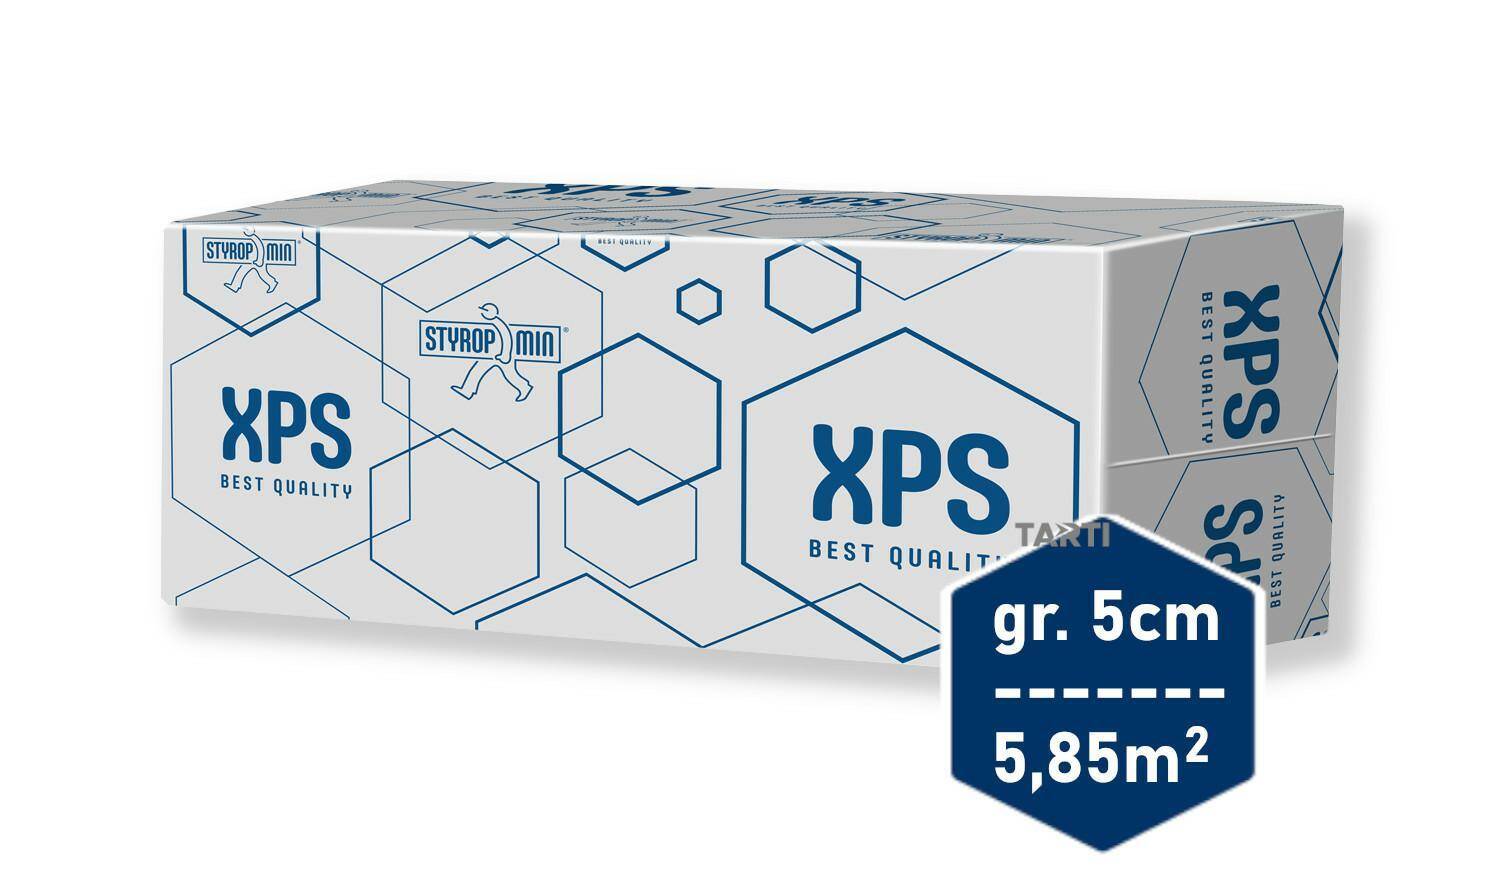 Styropmin XPS-300 gr.10cm frez